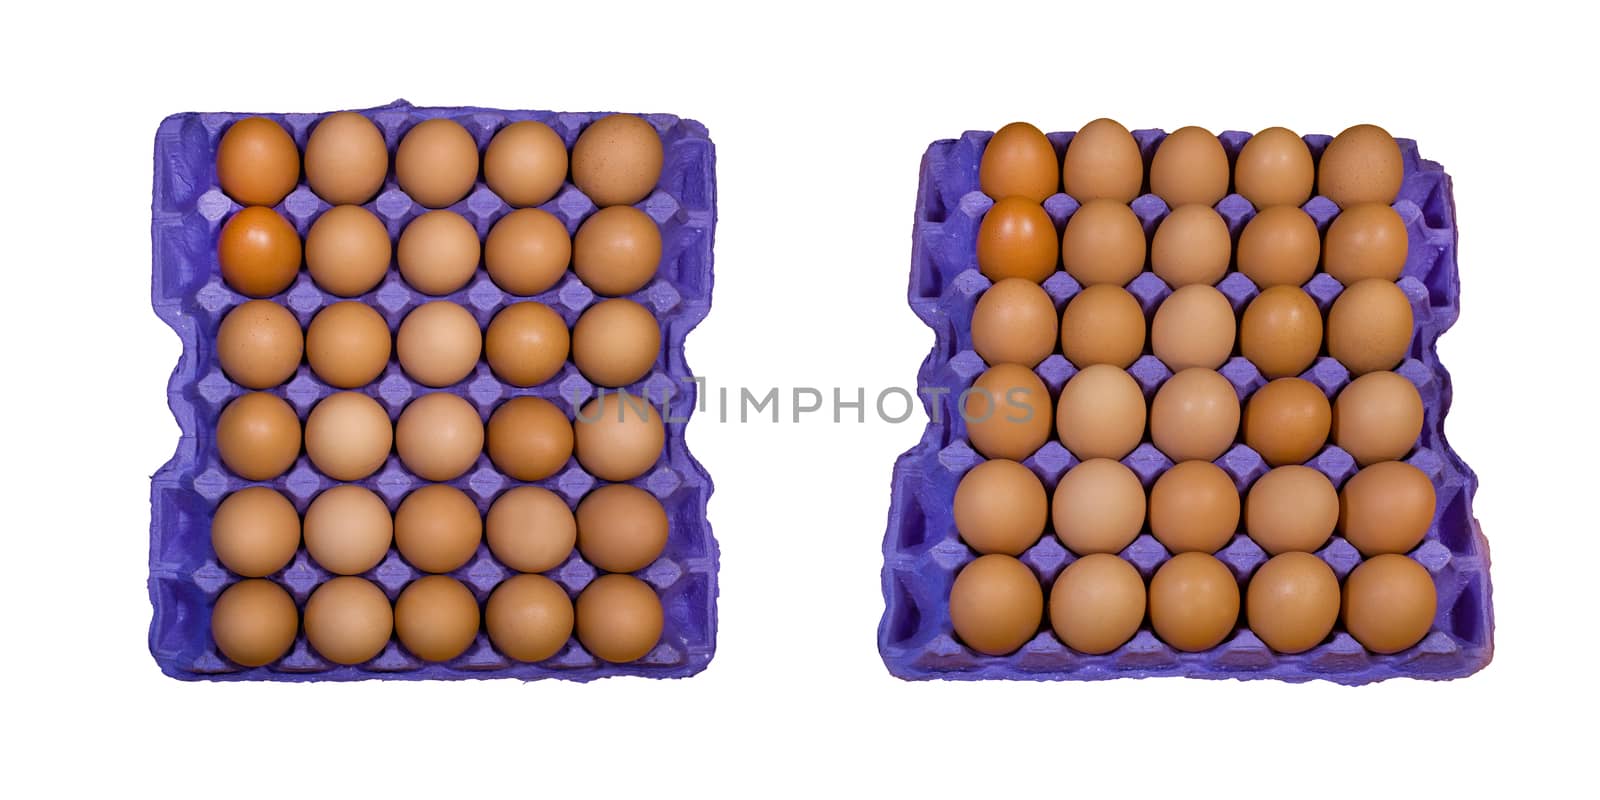 Chicken eggs in a tray by Krakatuk